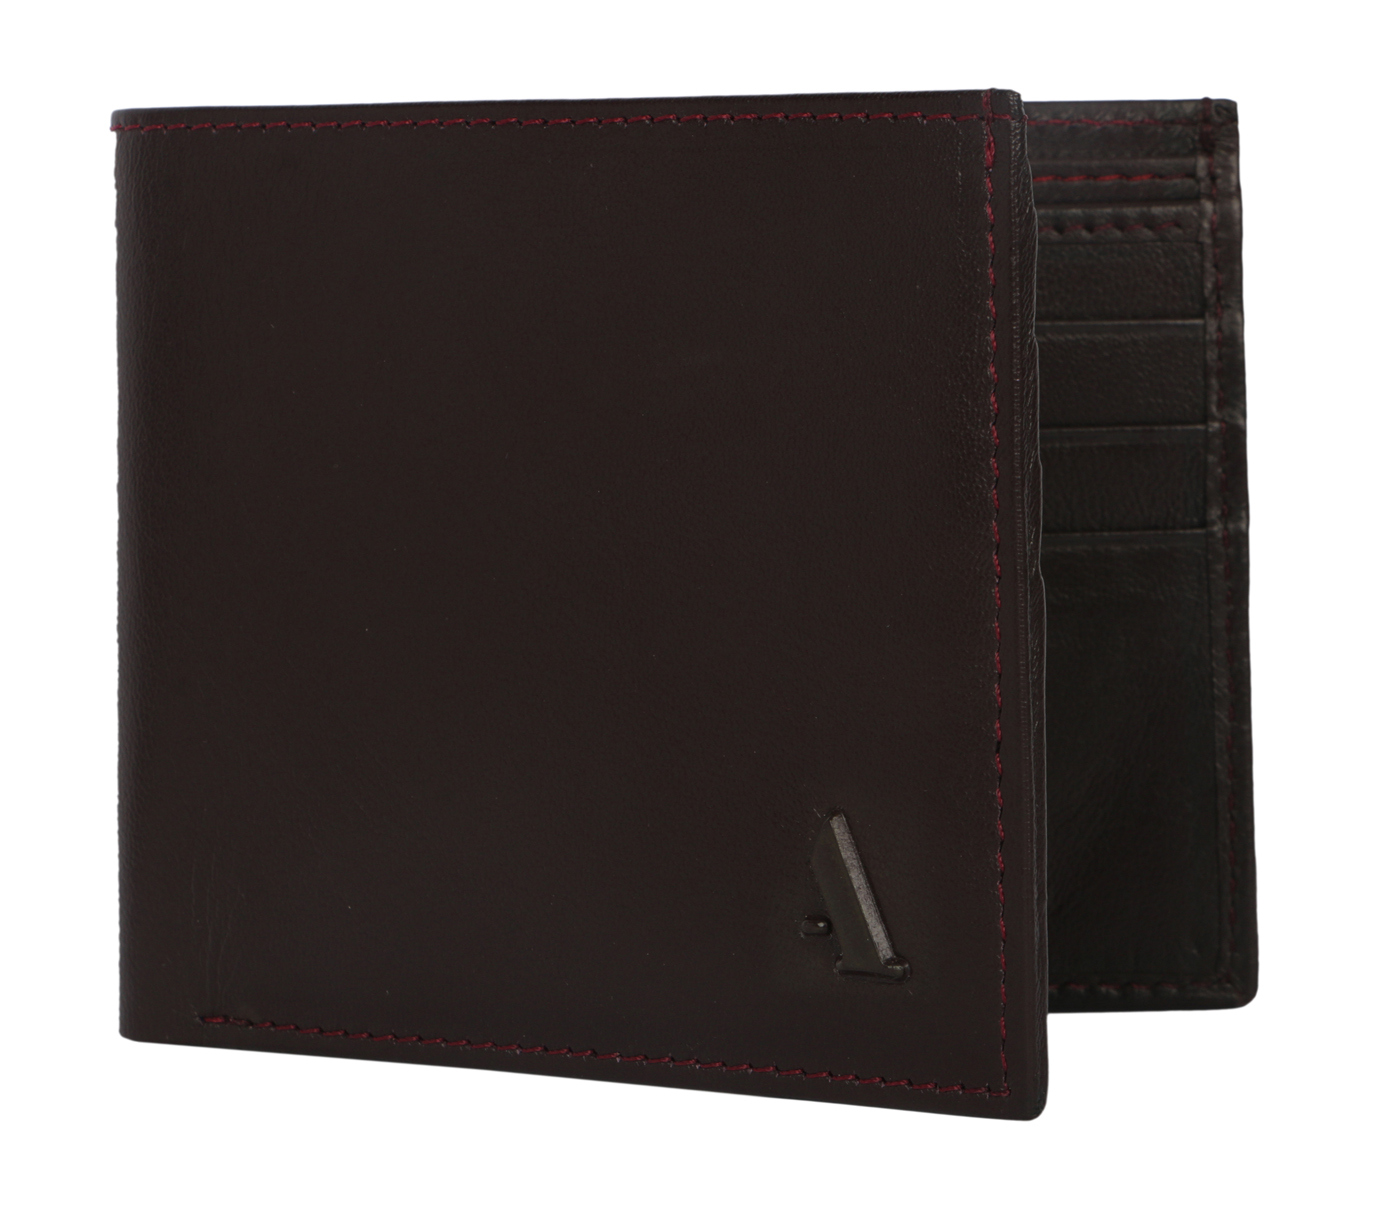 W41-Daniel-Men's bifold wallet with card pockets in Genuine Leather - Wine